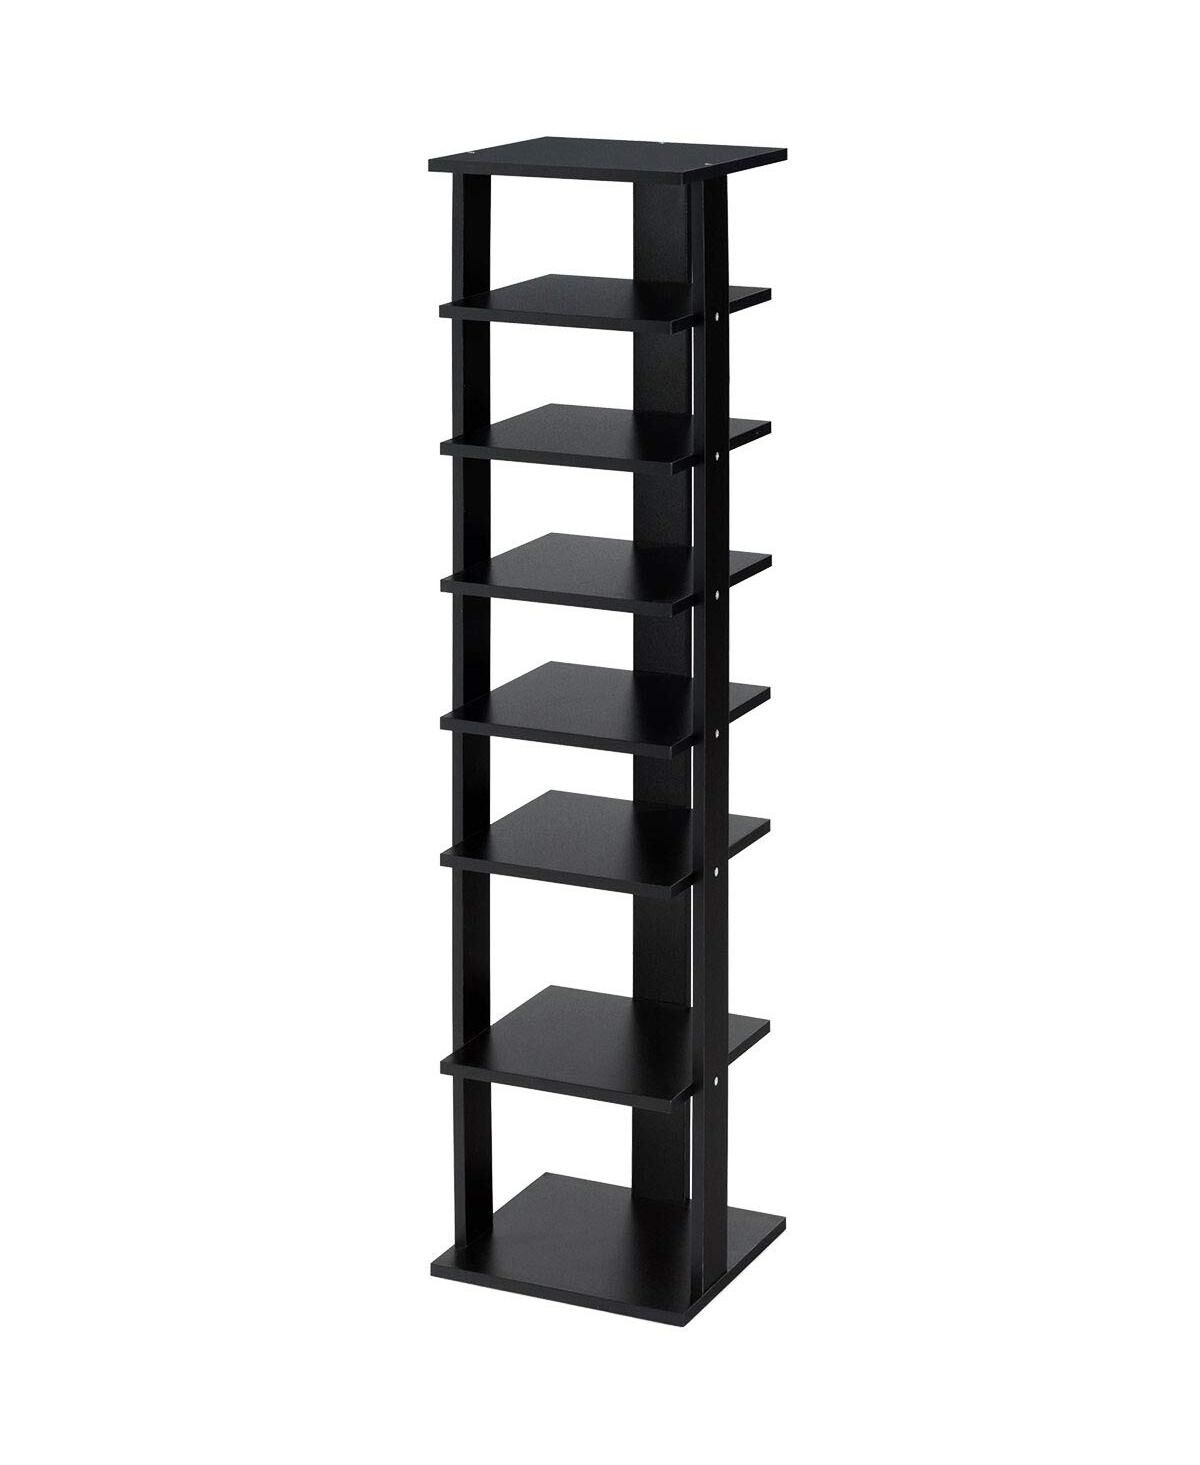 Slickblue 7-Tier Shoe Rack Practical Free Standing Shelves Storage Shelves - Black